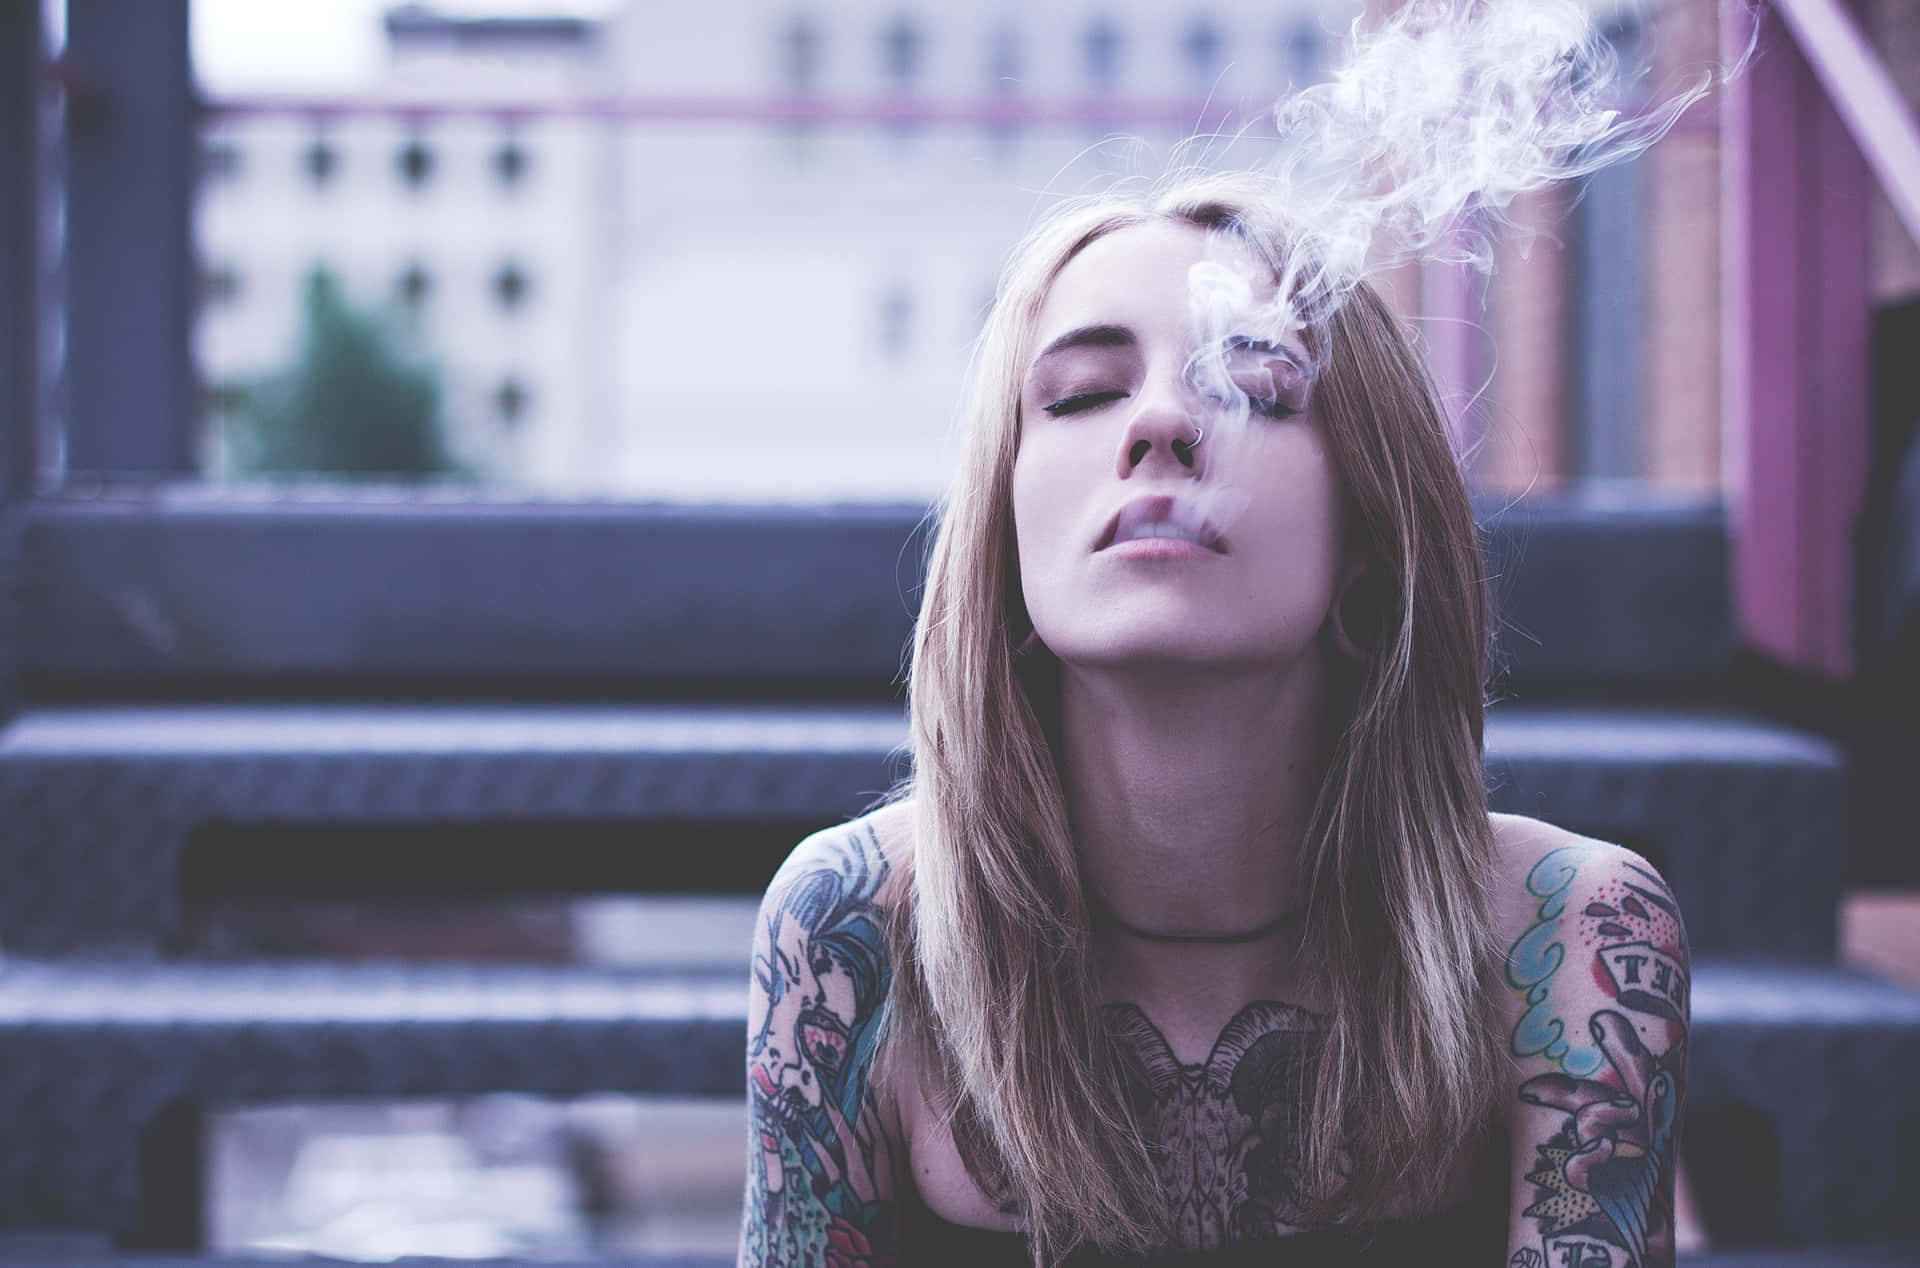 Tattooed Girl Smoking Outside Background